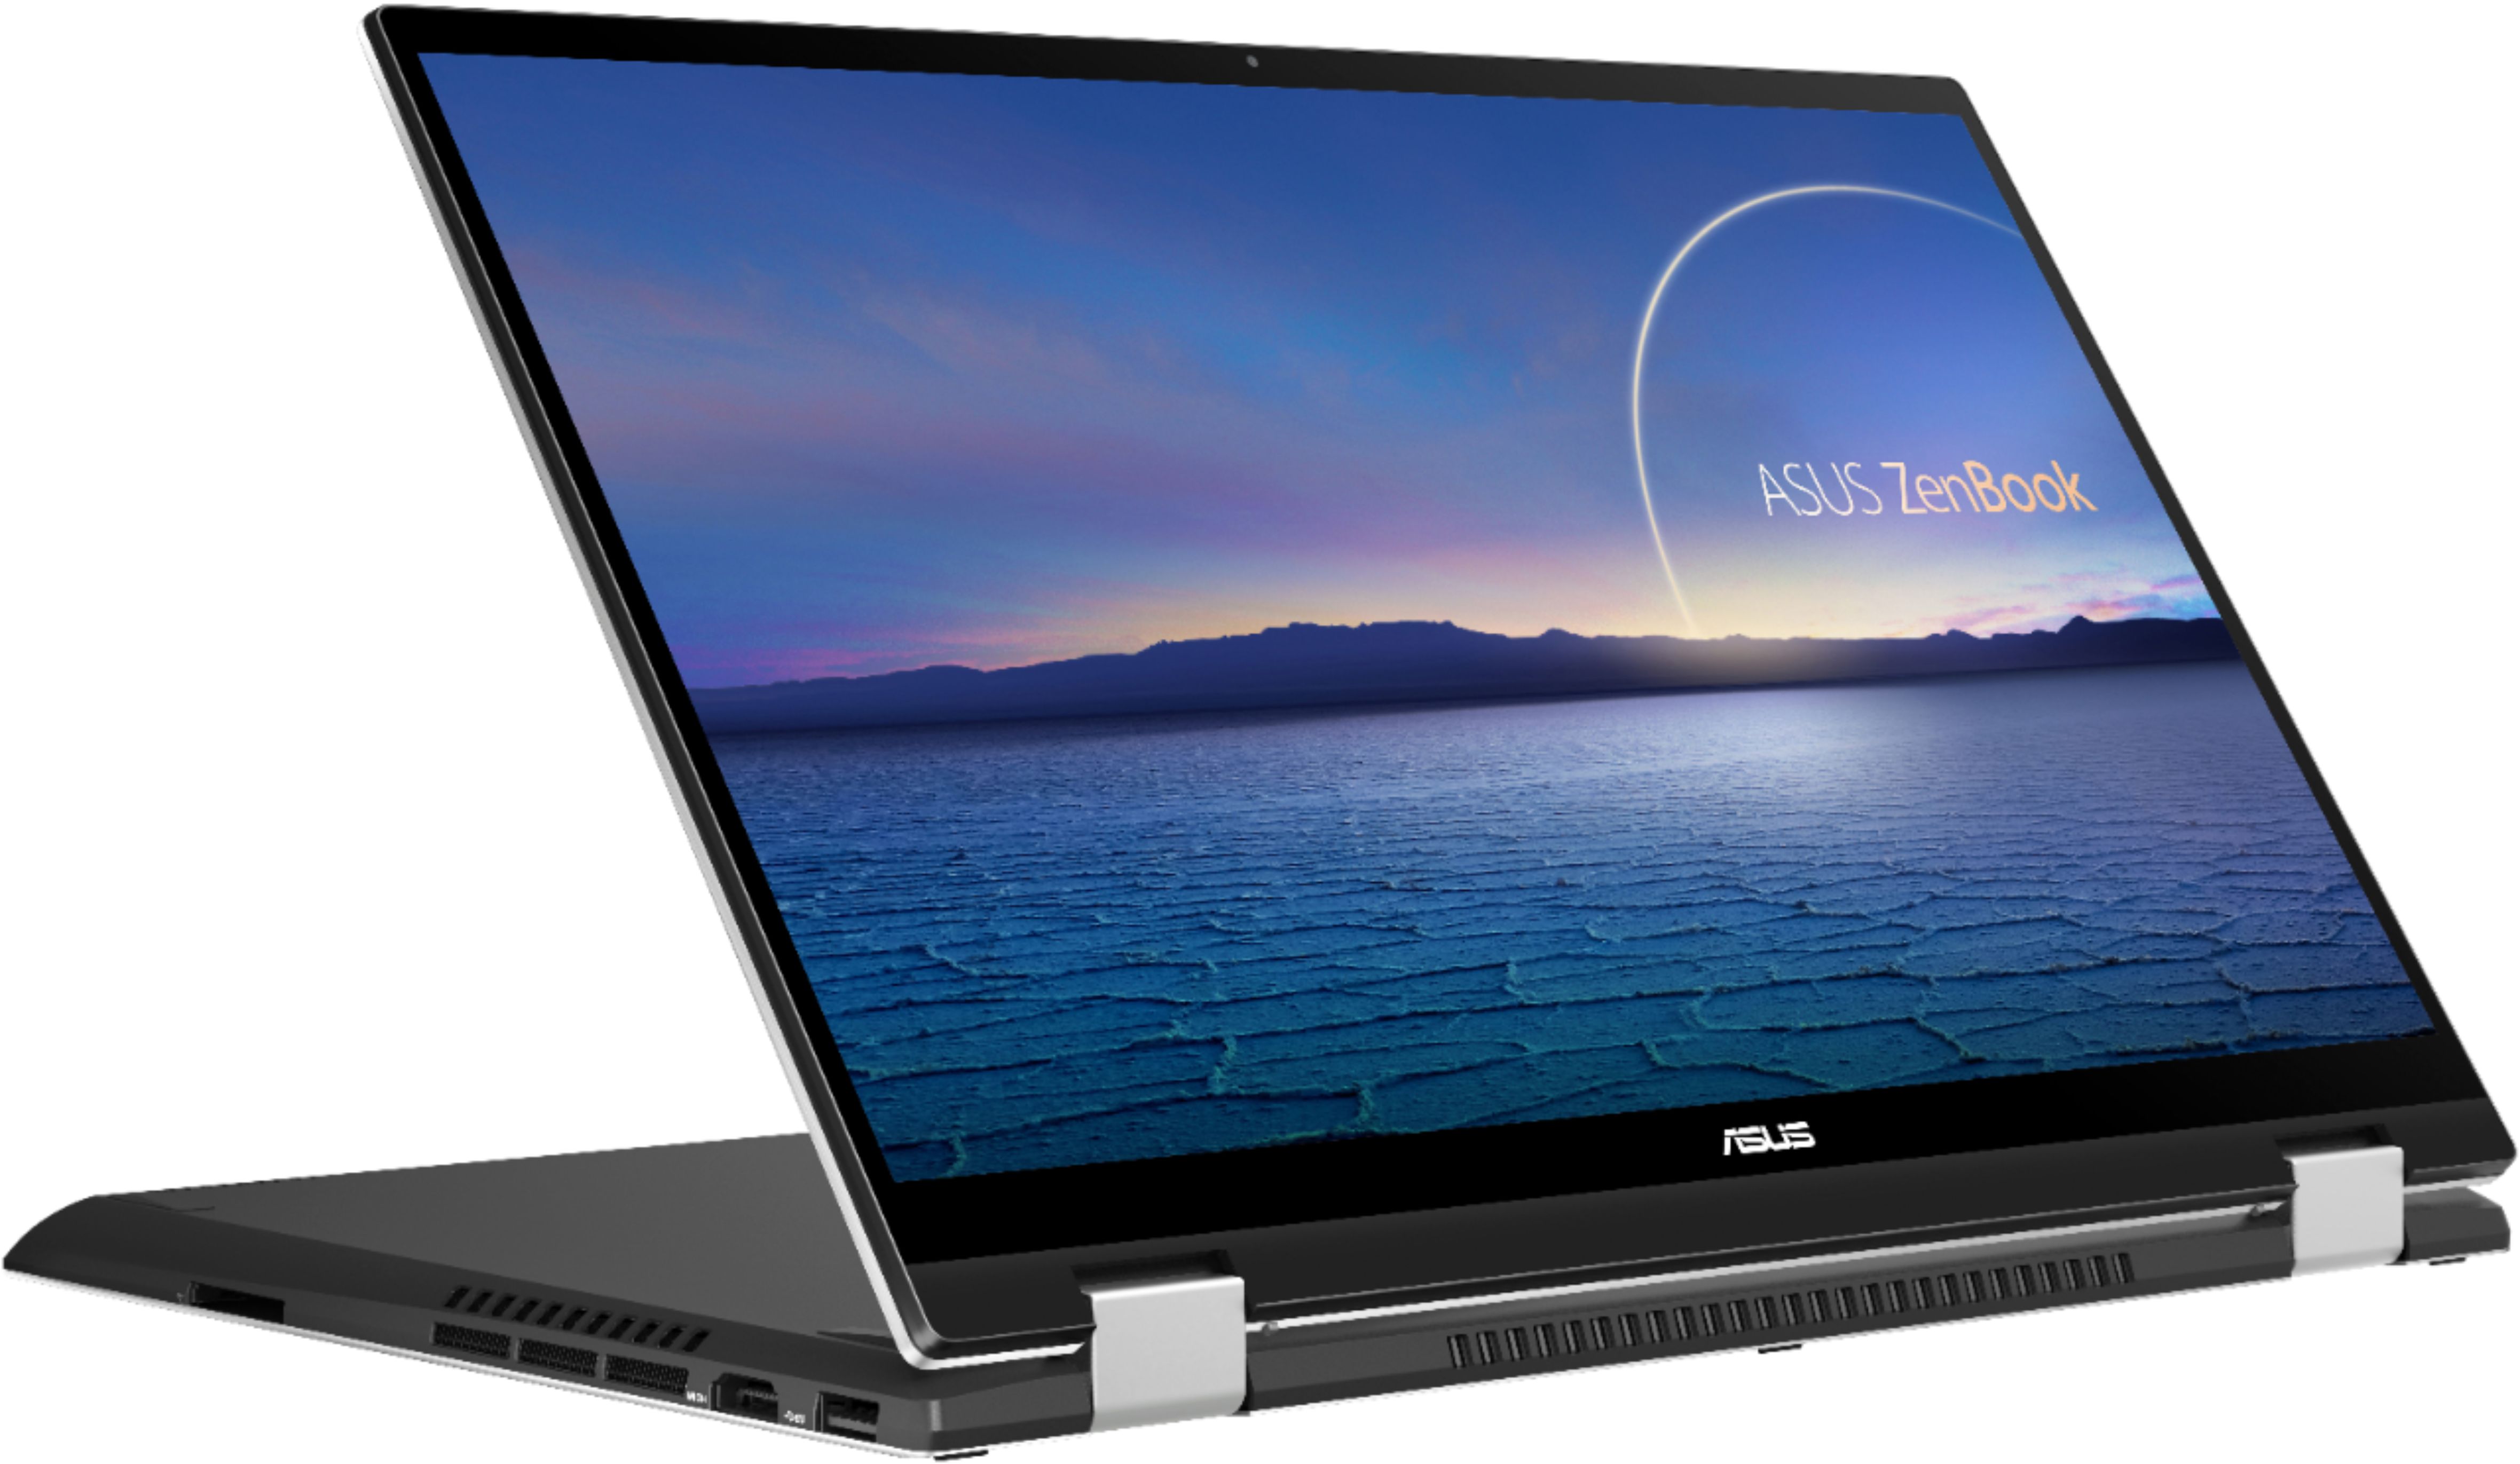  ASUS ZenBook 15 Ultra-Slim Laptop 15.6” FHD NanoEdge Bezel,  Intel Core i7-10510U, 16GB RAM, 1TB PCIe SSD, GeForce GTX 1650, Innovative  ScreenPad 2.0, Windows 10 Pro, UX534FTC-XH77, Royal Blue : Electronics